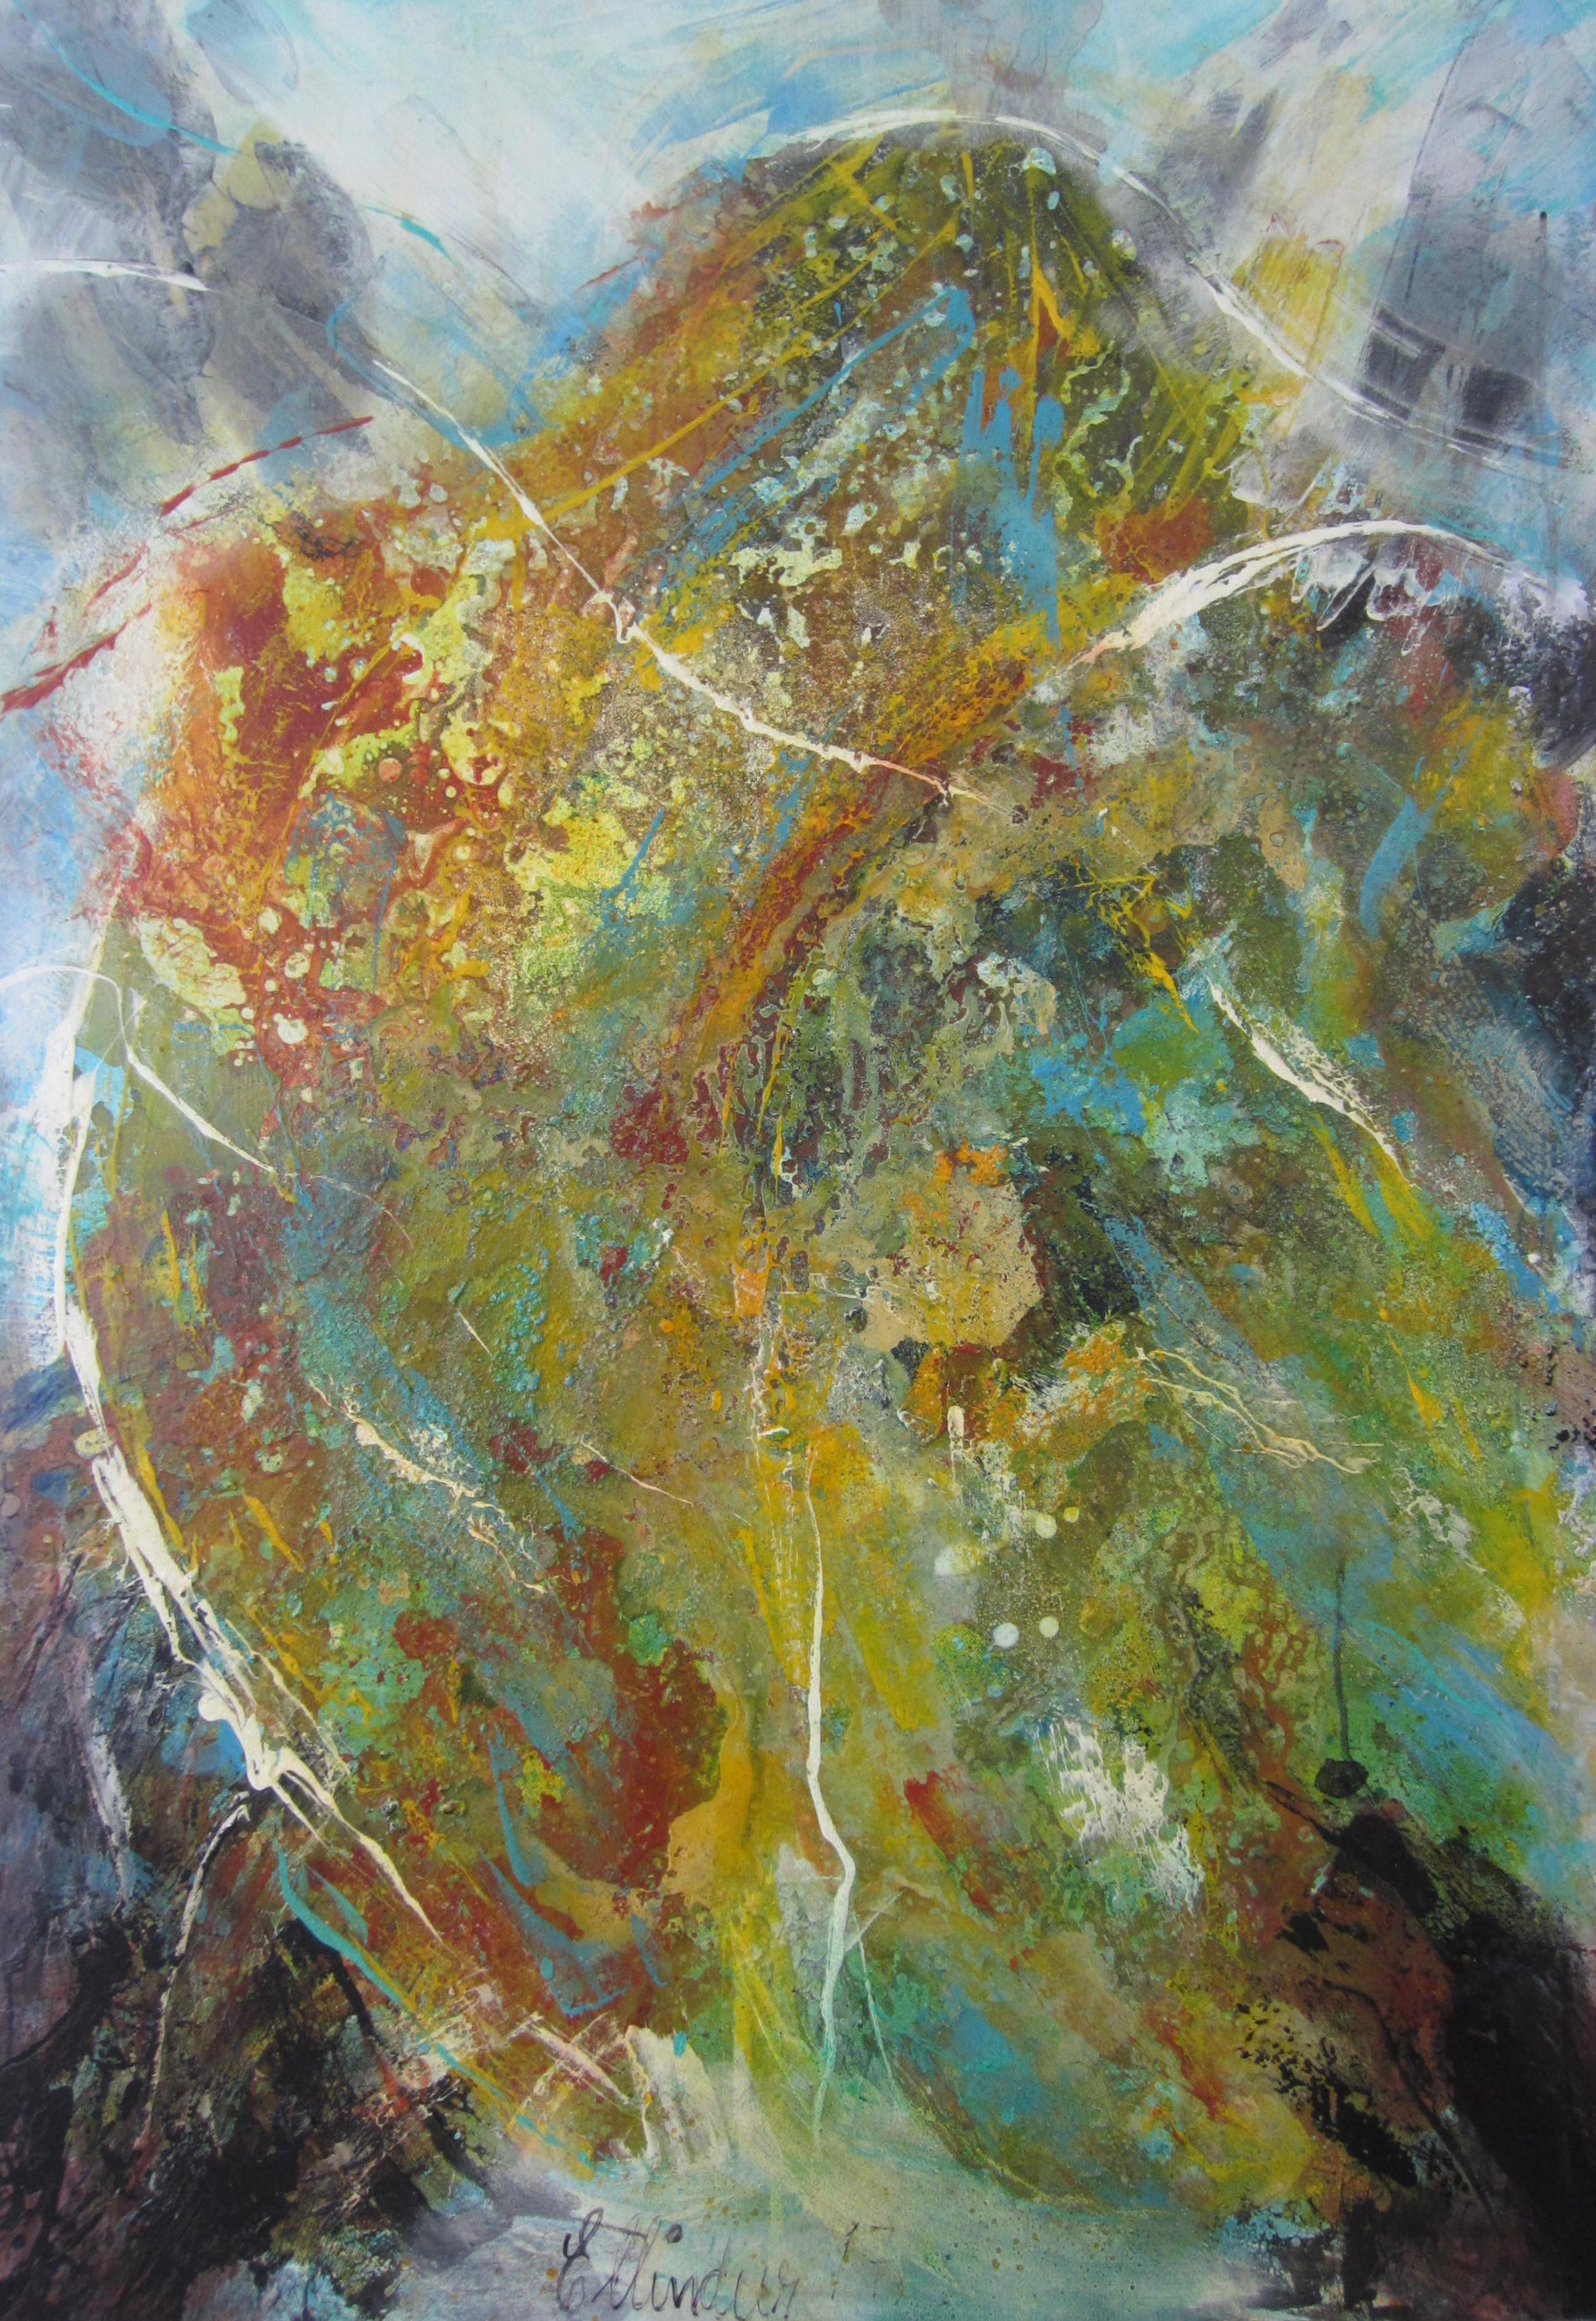 Ellindur Egilstrøđ Abstract Painting - "Morning has broken" - Semi-abstract landscape. Mixed media with oil on canvas.